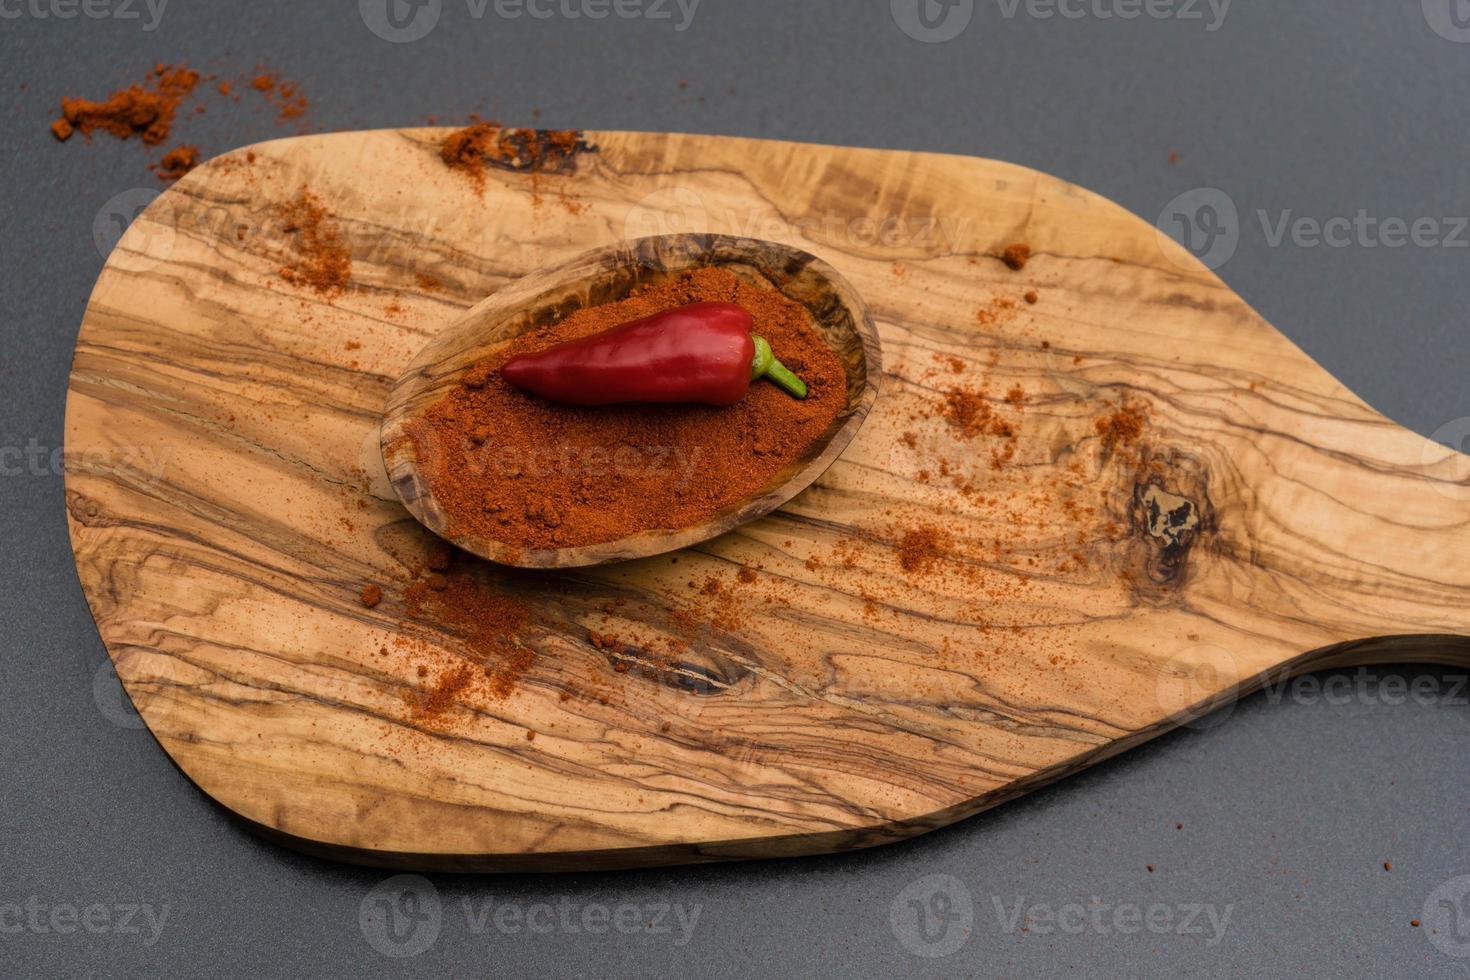 pimenta pimenta vermelha vegetal picante foto